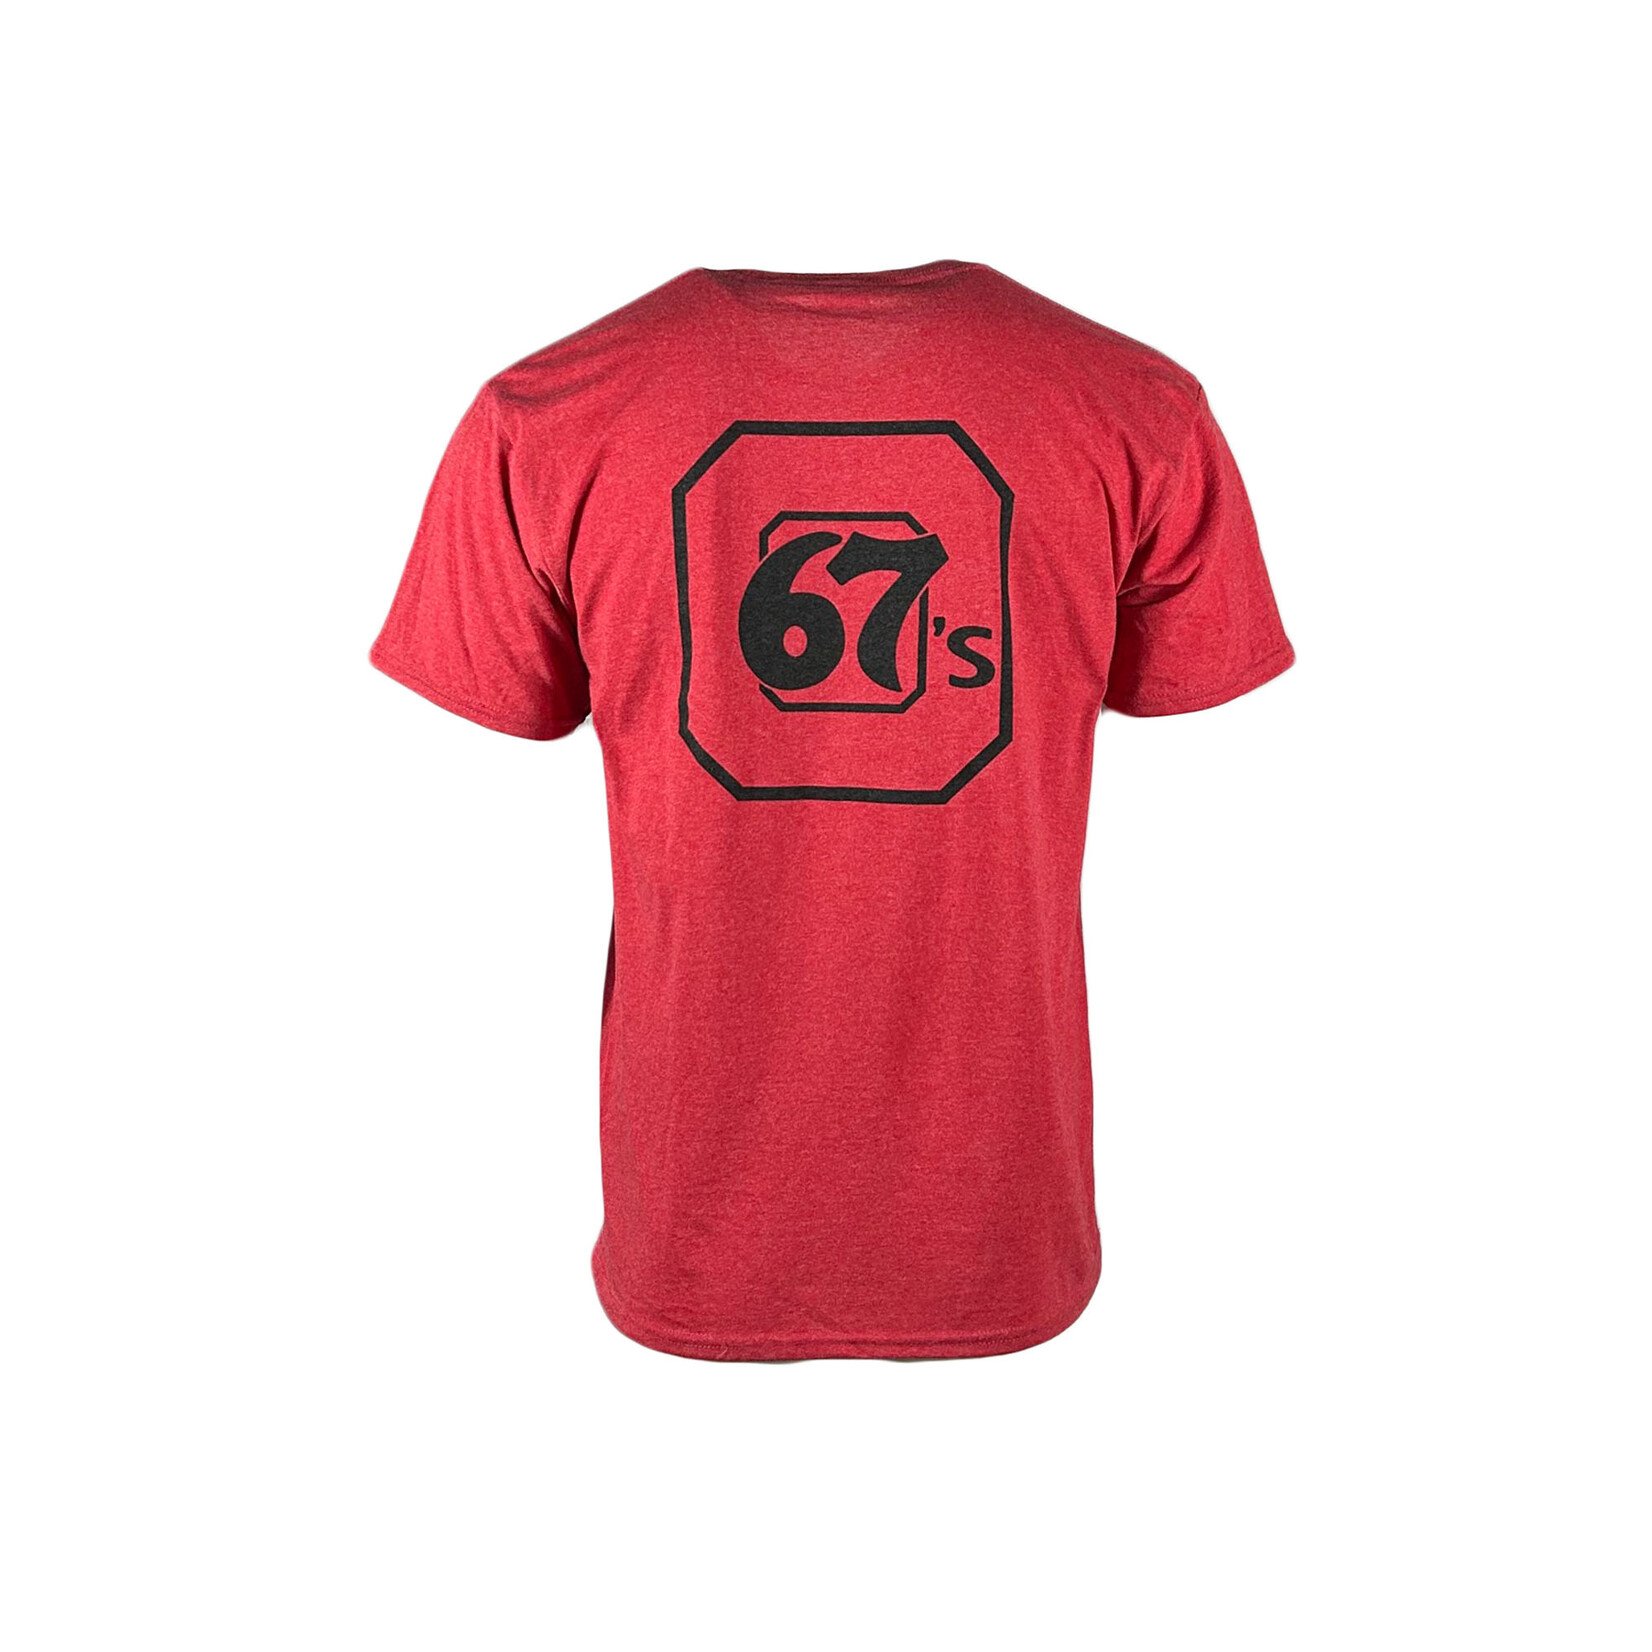 OTTAWA 67's 67's Hockey Club Red Shirt